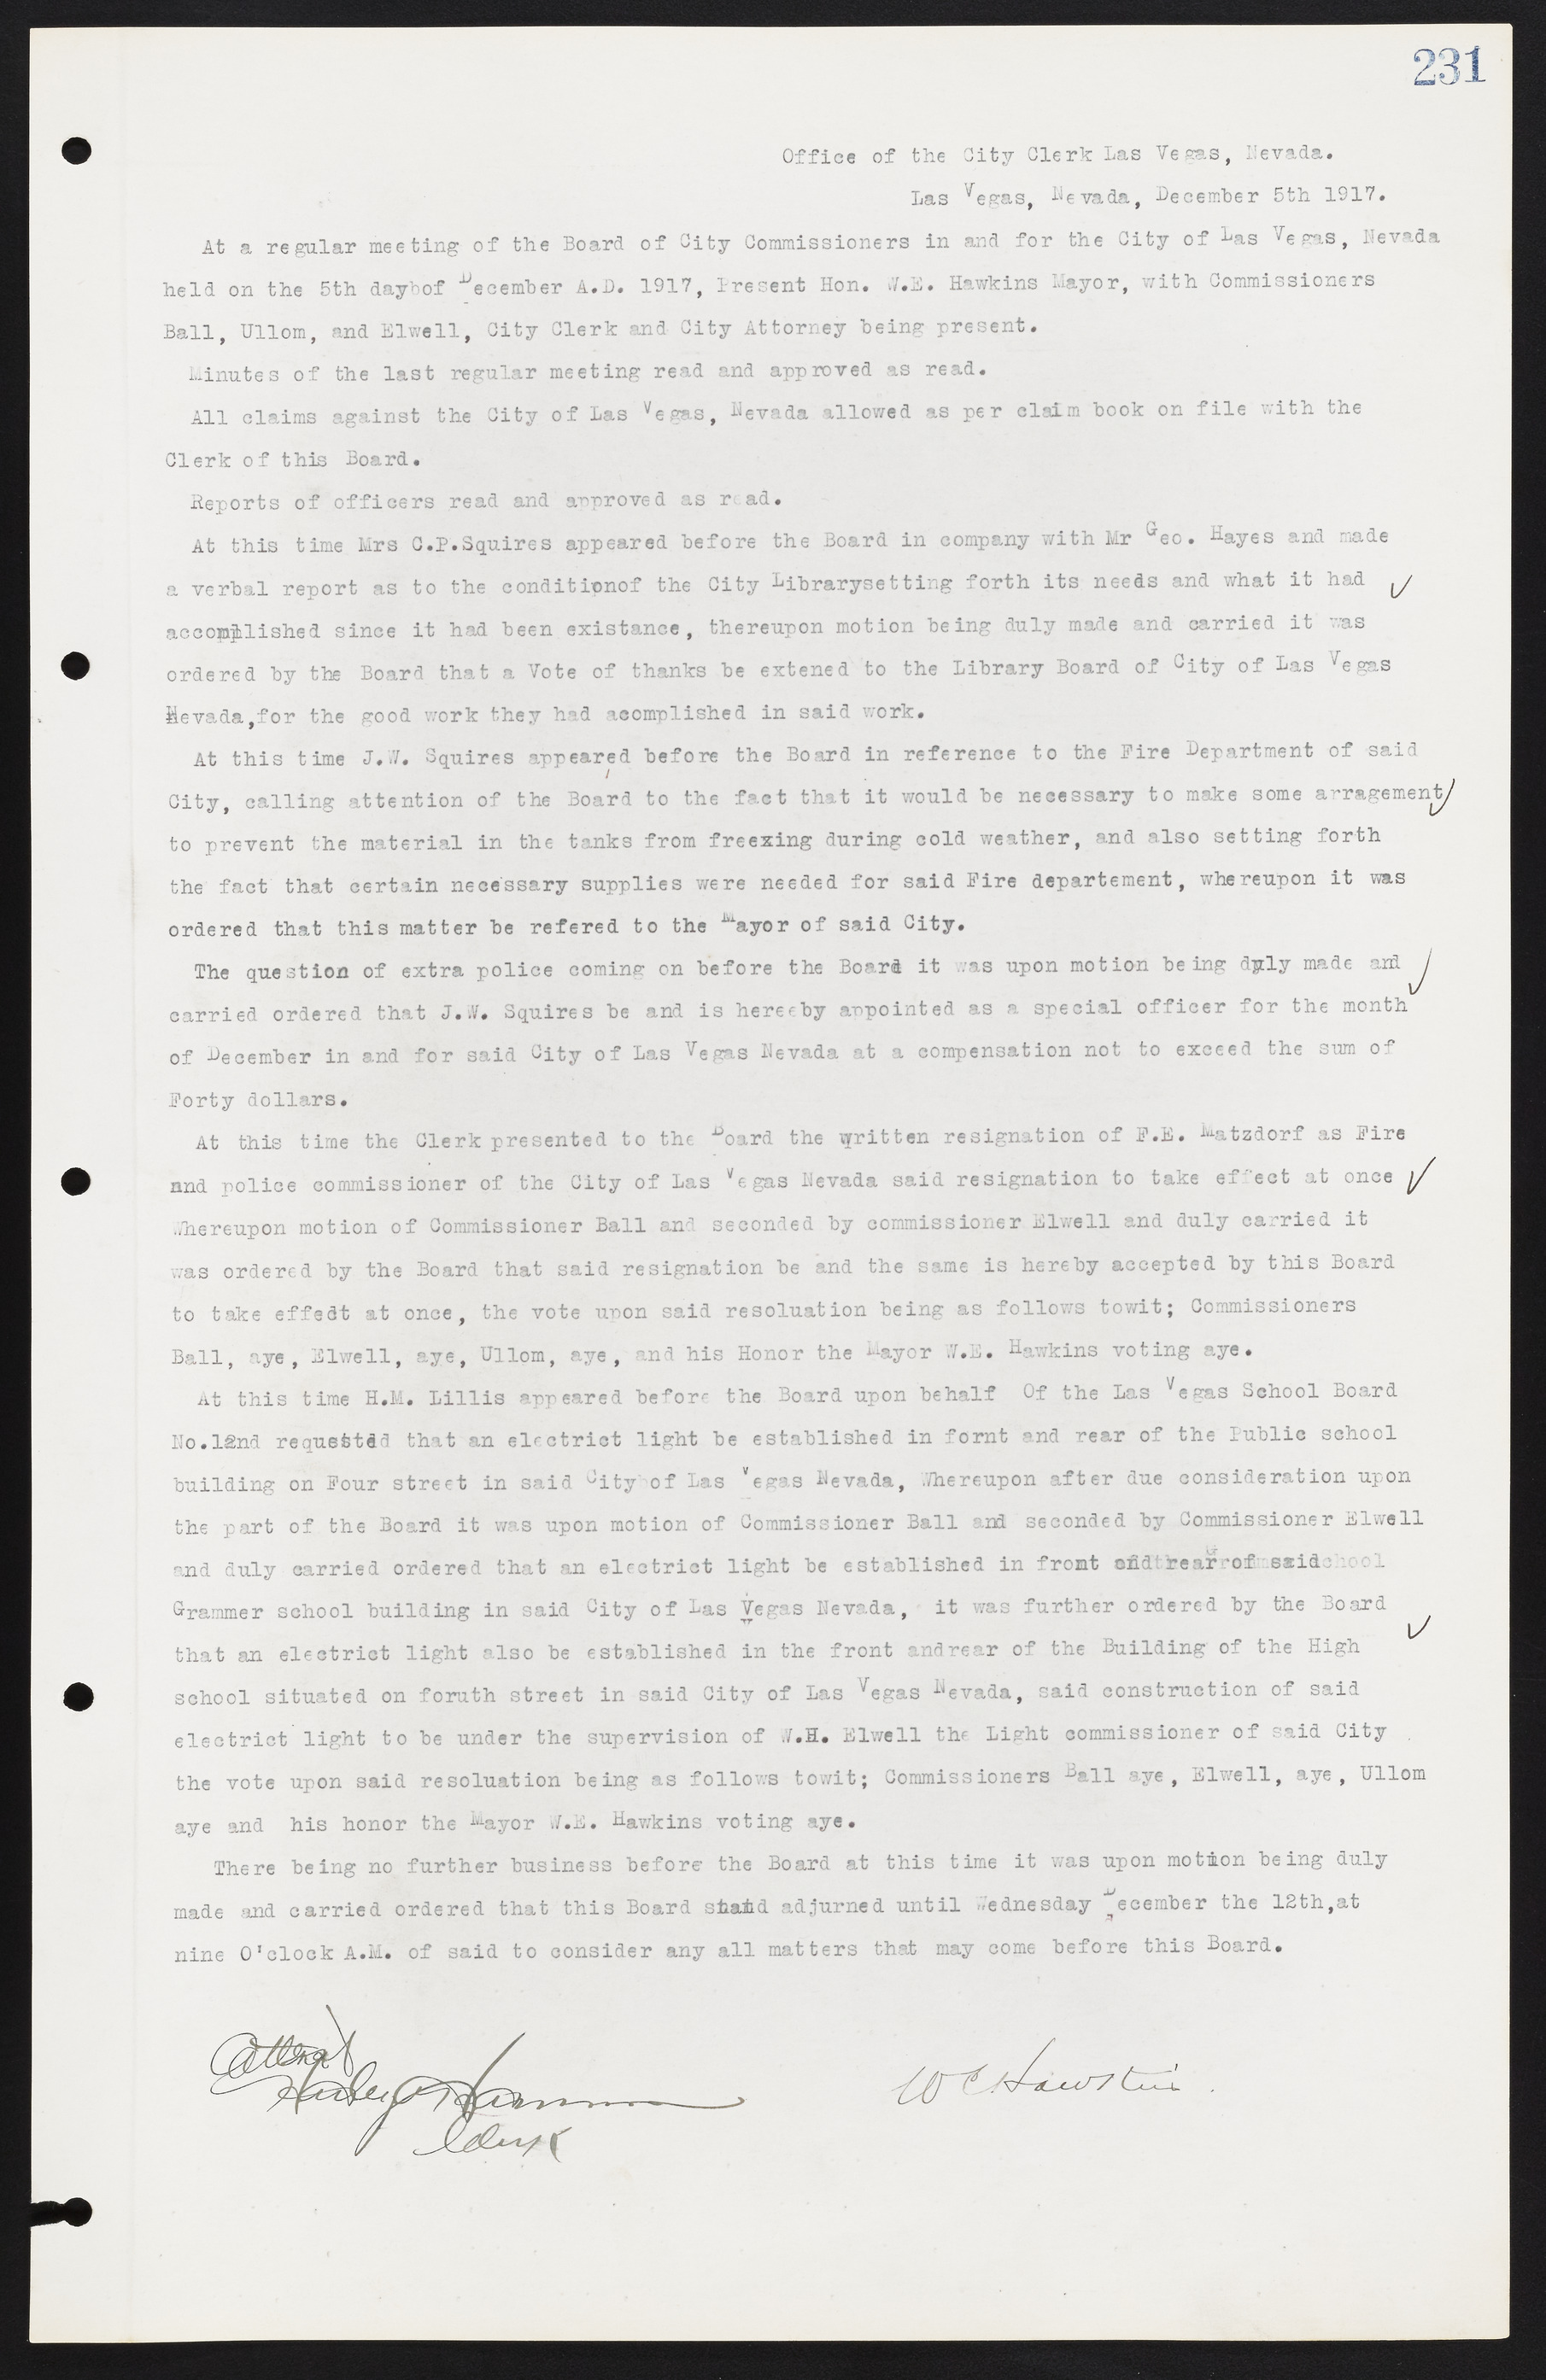 Las Vegas City Commission Minutes, June 22, 1911 to February 7, 1922, lvc000001-247